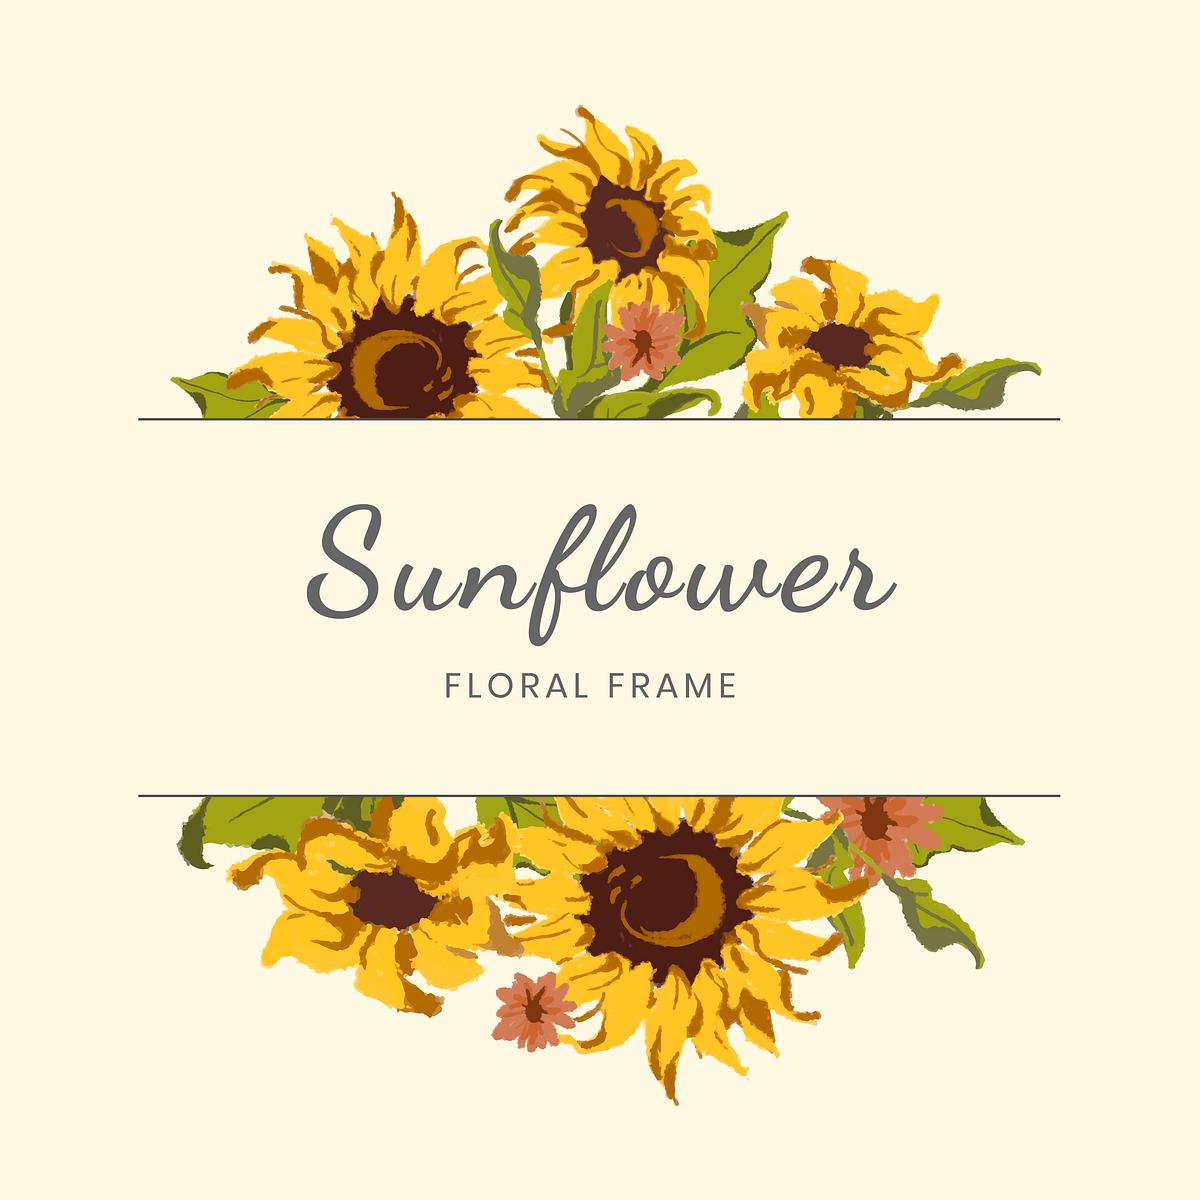 Download Sunflower wreath | Free stock vector - 558727